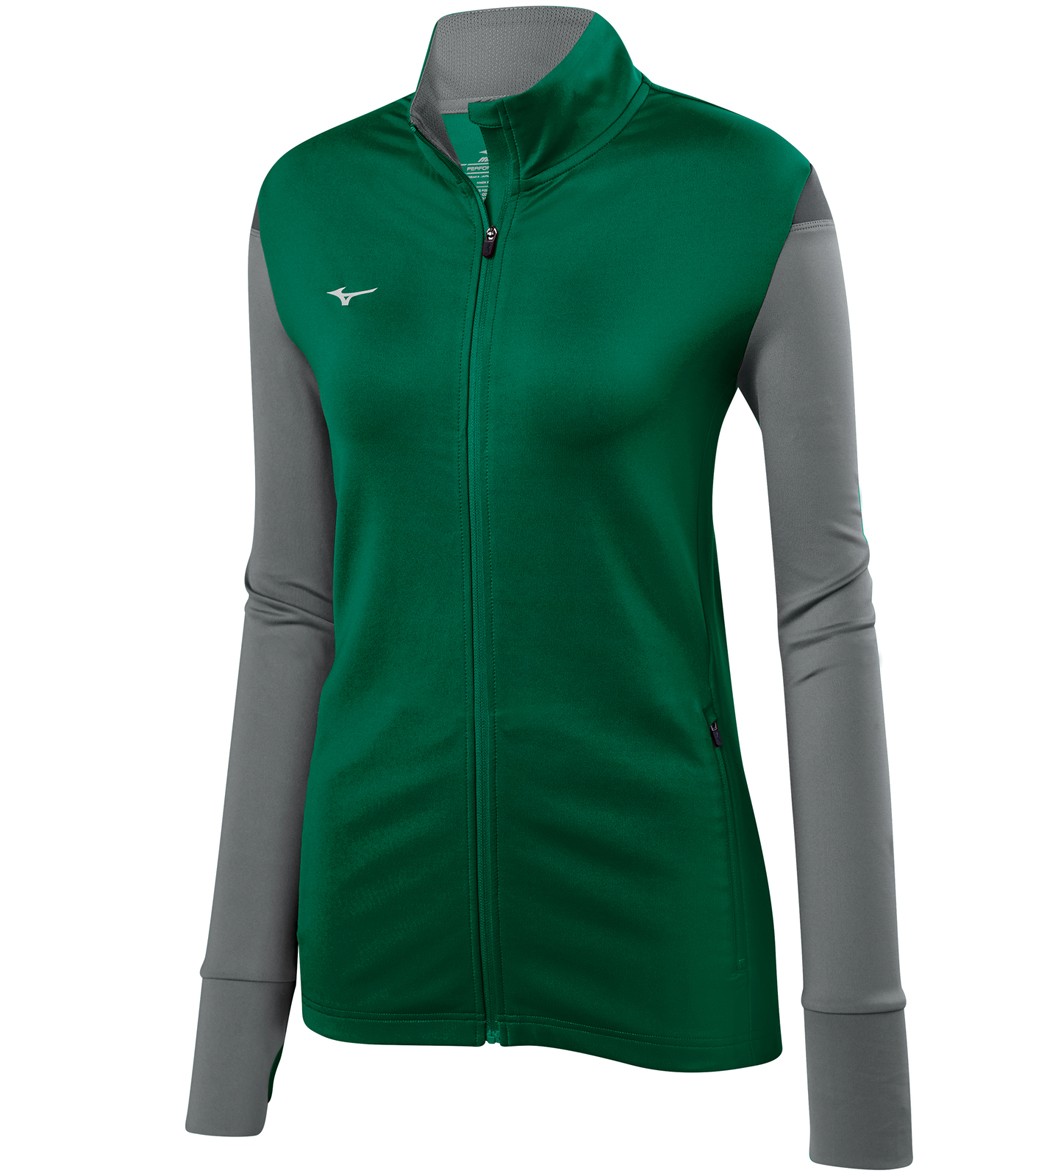 Mizuno Women's Horizon Full Zip Volleyball Jacket - Forest/Grey/Charcoal Medium - Swimoutlet.com